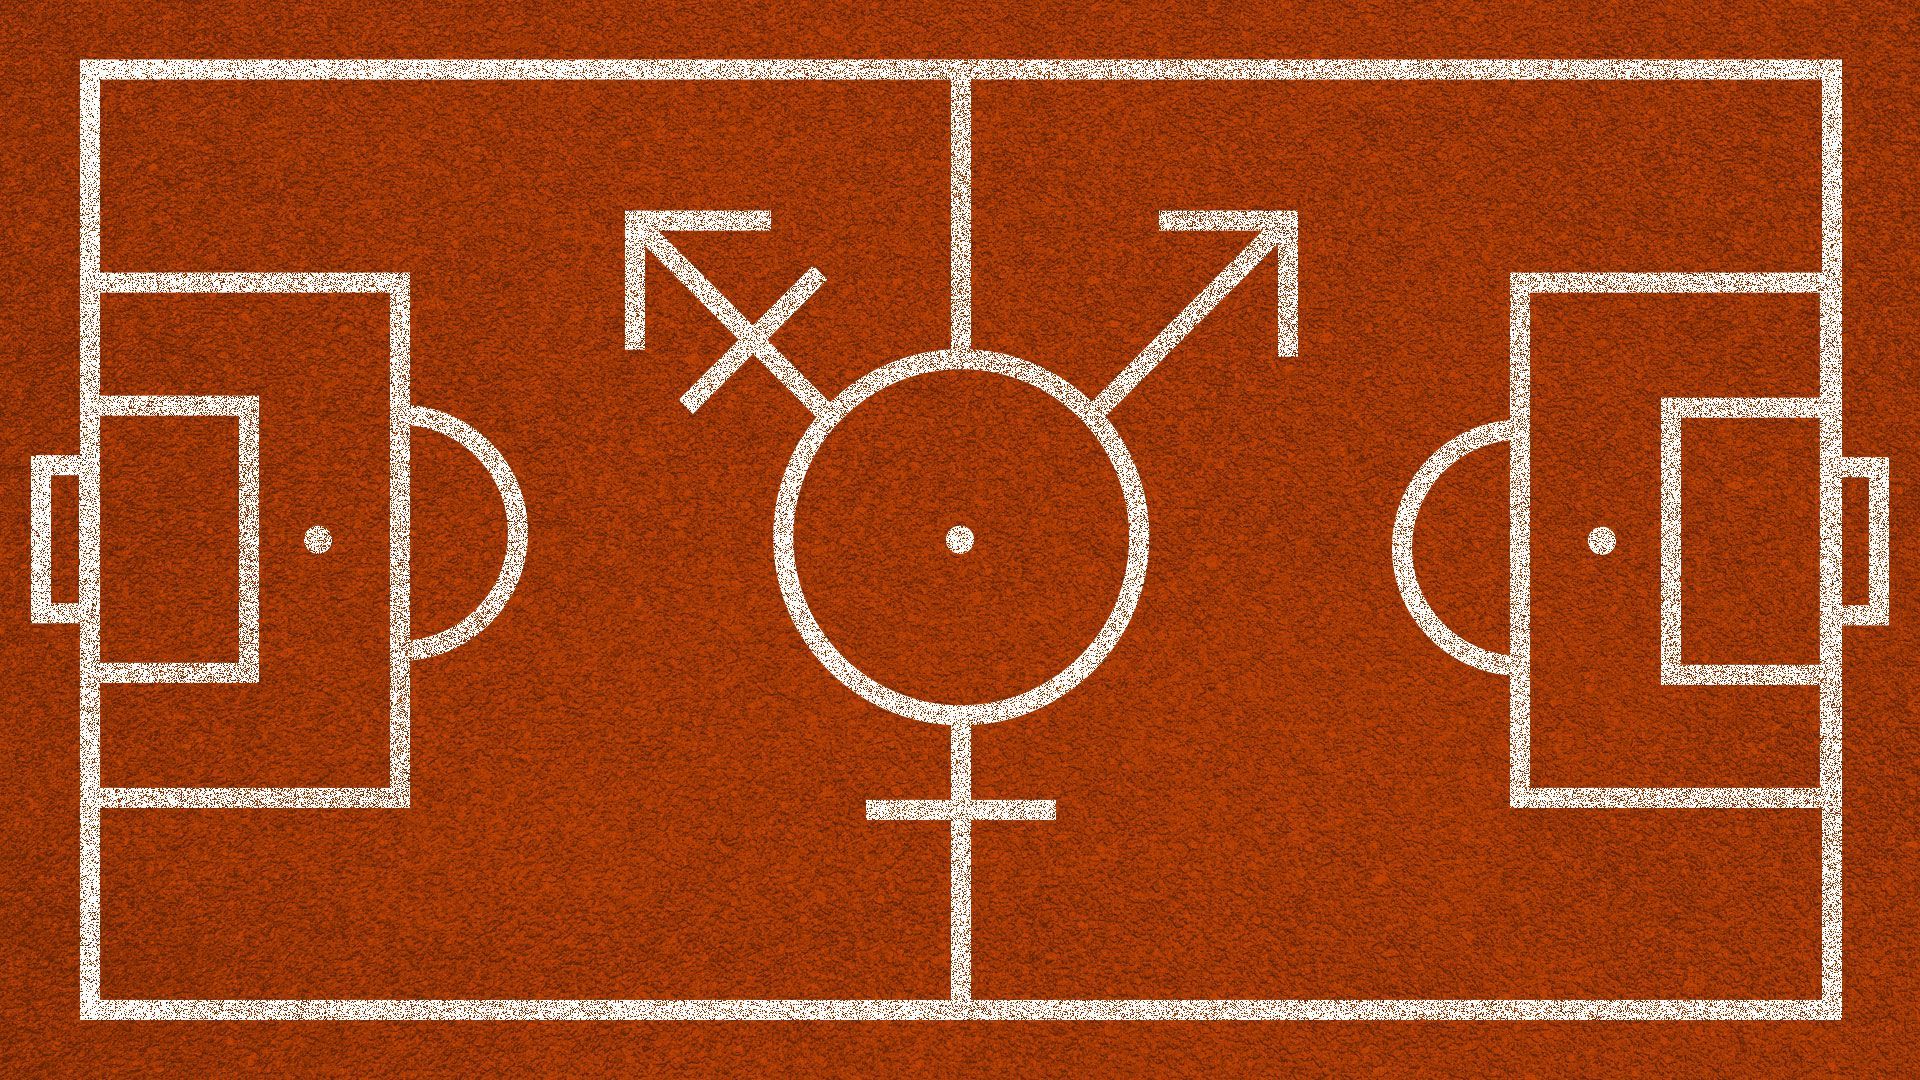 Illustration of the transgender symbol as a sport court.